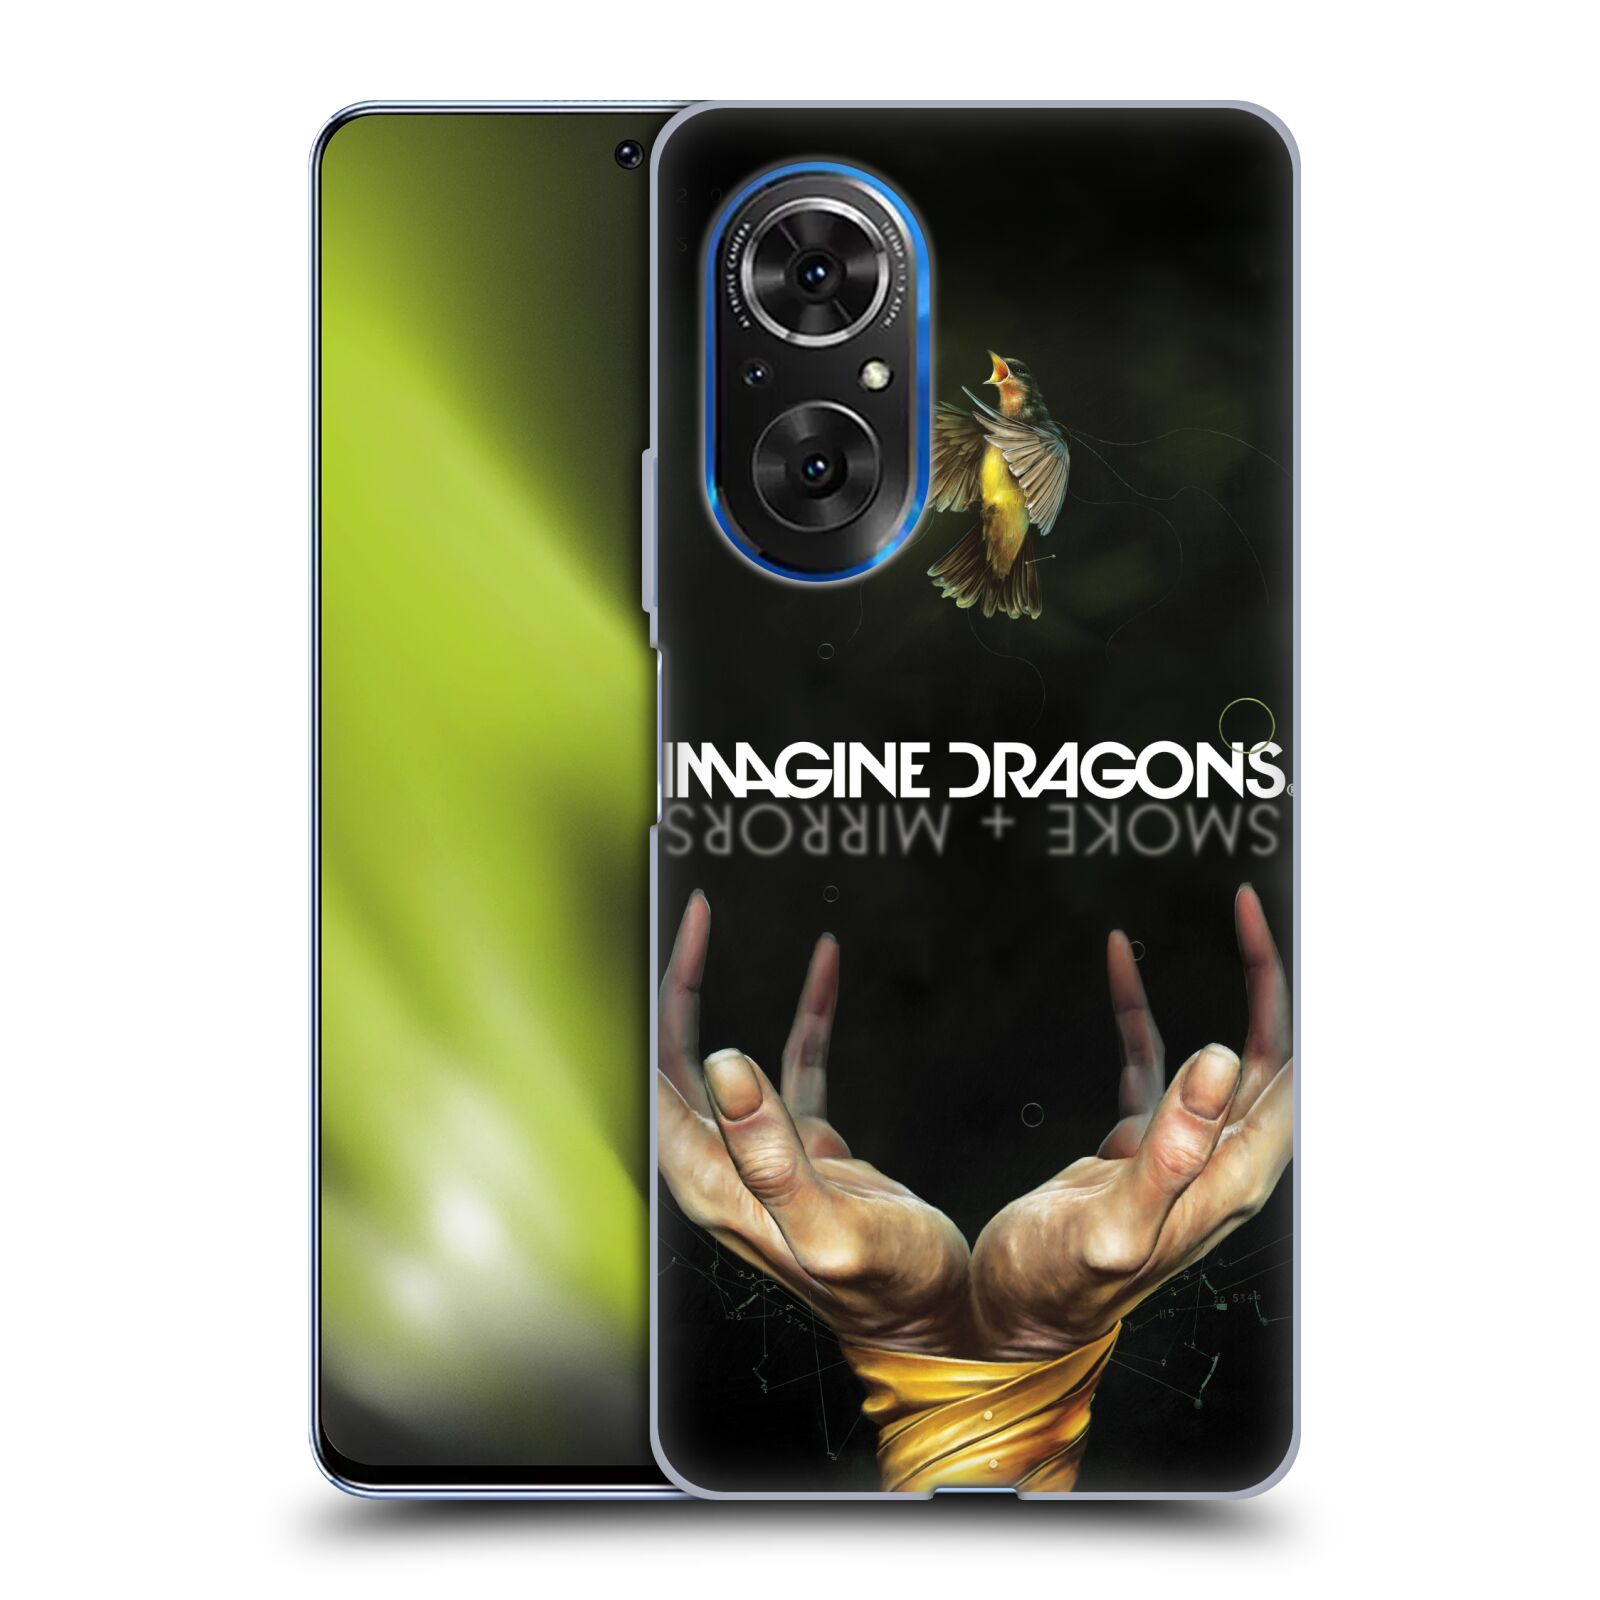 Silikonové pouzdro na mobil Huawei Nova 9 SE - Imagine Dragons - Smoke And Mirrors